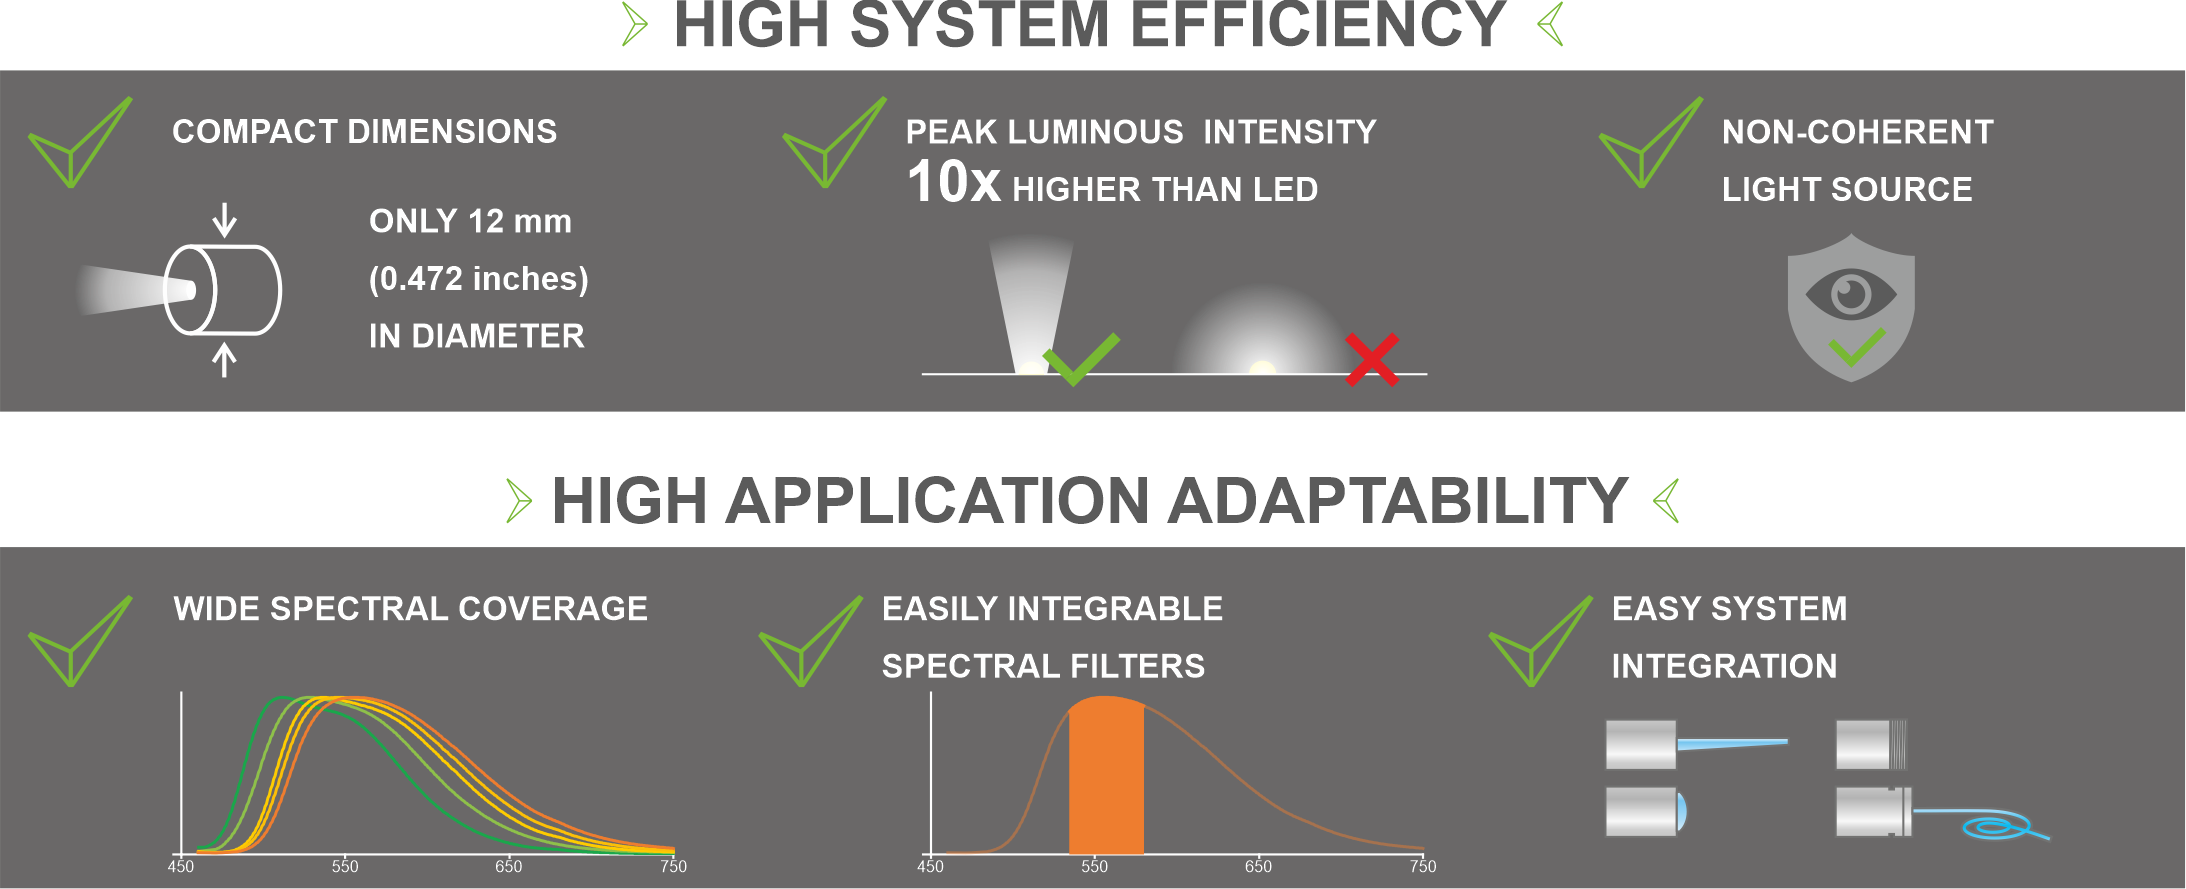 Laser Phosphors for Next-Generation Lighting Applications